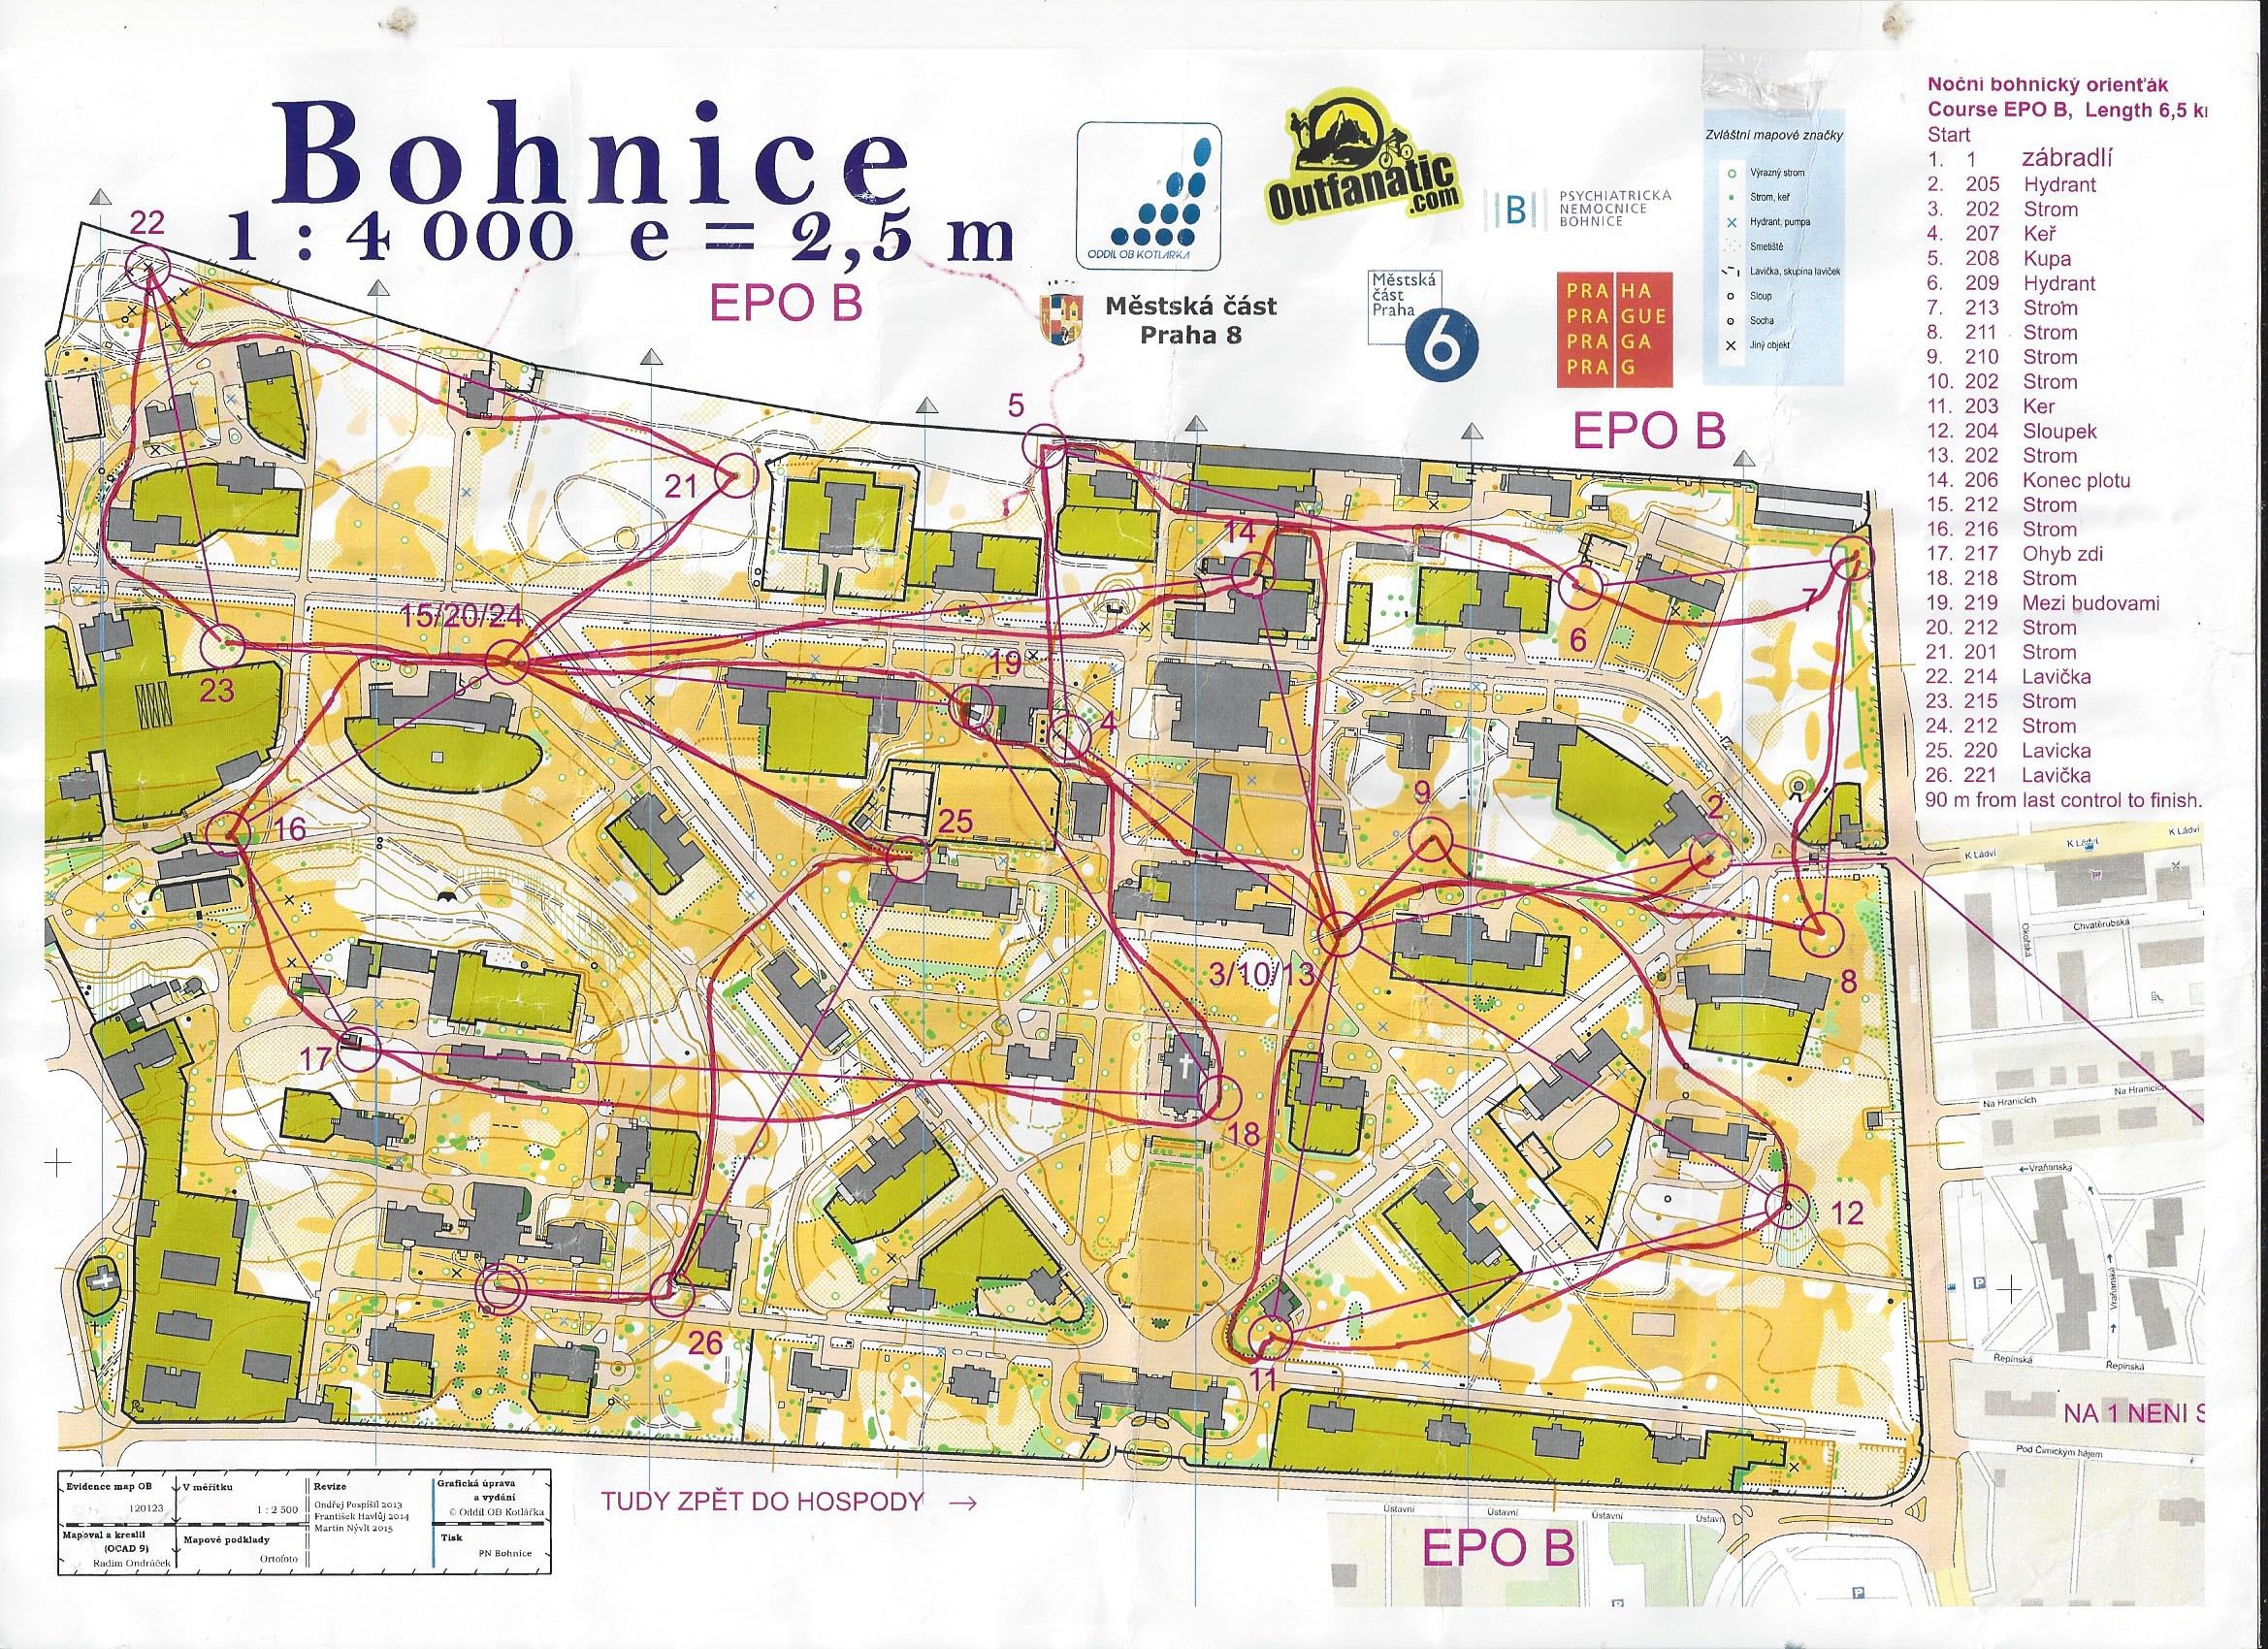 EPO OB Bohnice - B / mapa 2 (20-10-2015)